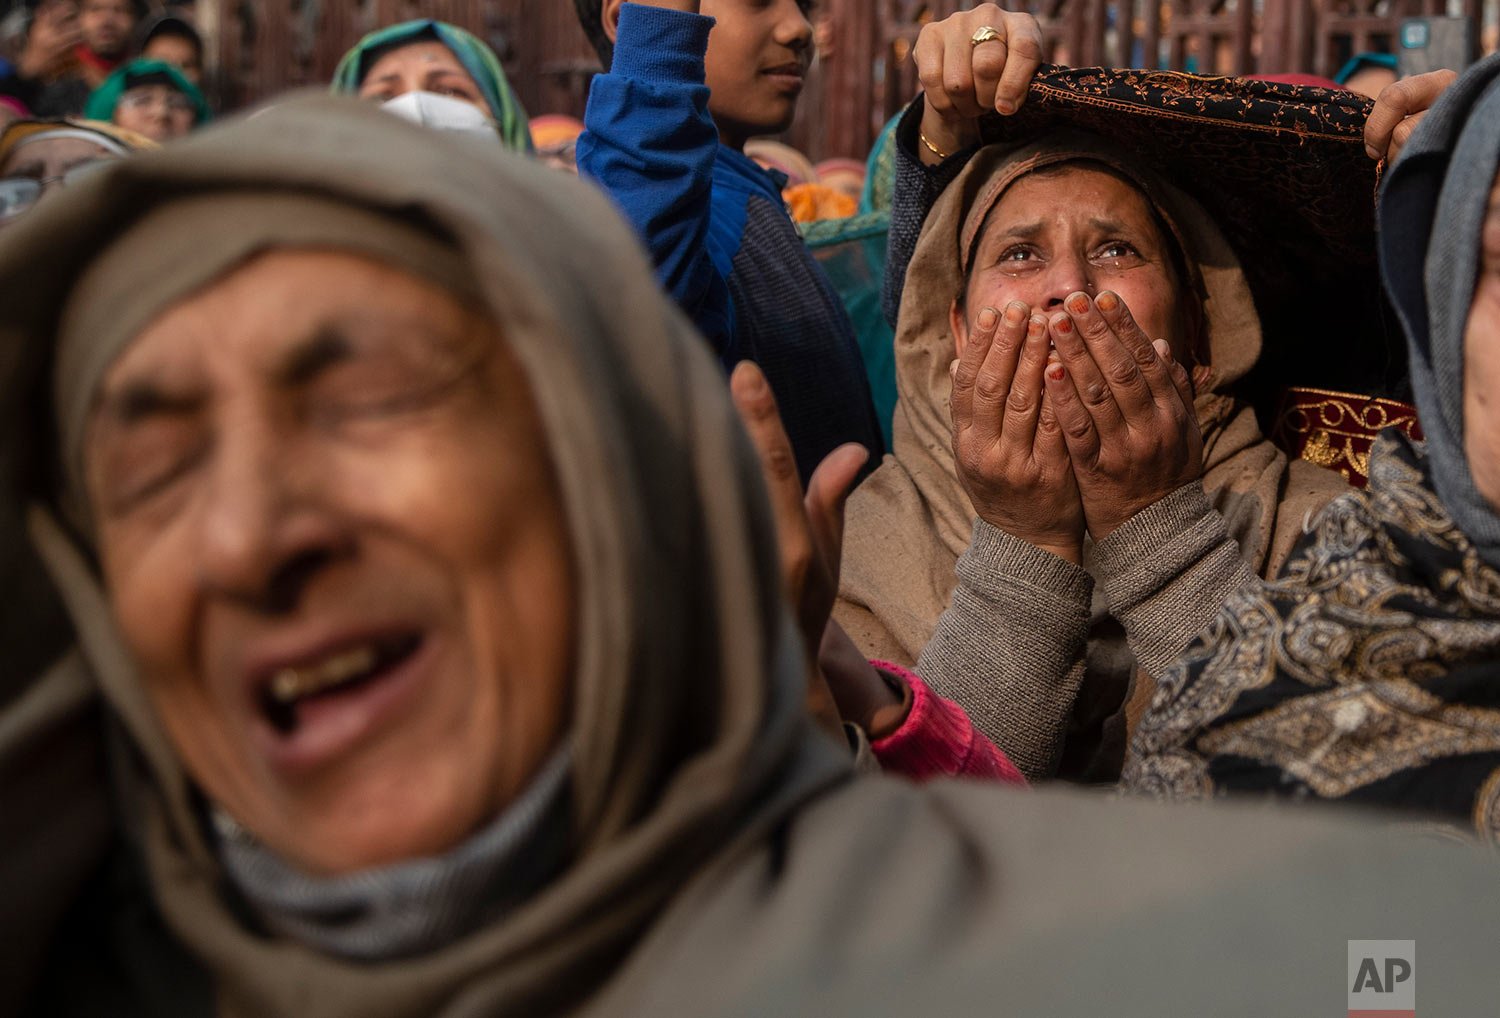  Kashmiri Muslim women devotees weep while praying as a priest displays a relic of Sufi saint Sheikh Syed Abdul Qadir Jeelani outside his shrine in Srinagar, Indian controlled Kashmir, Wednesday, Nov. 17, 2021. (AP Photo/Mukhtar Khan) 